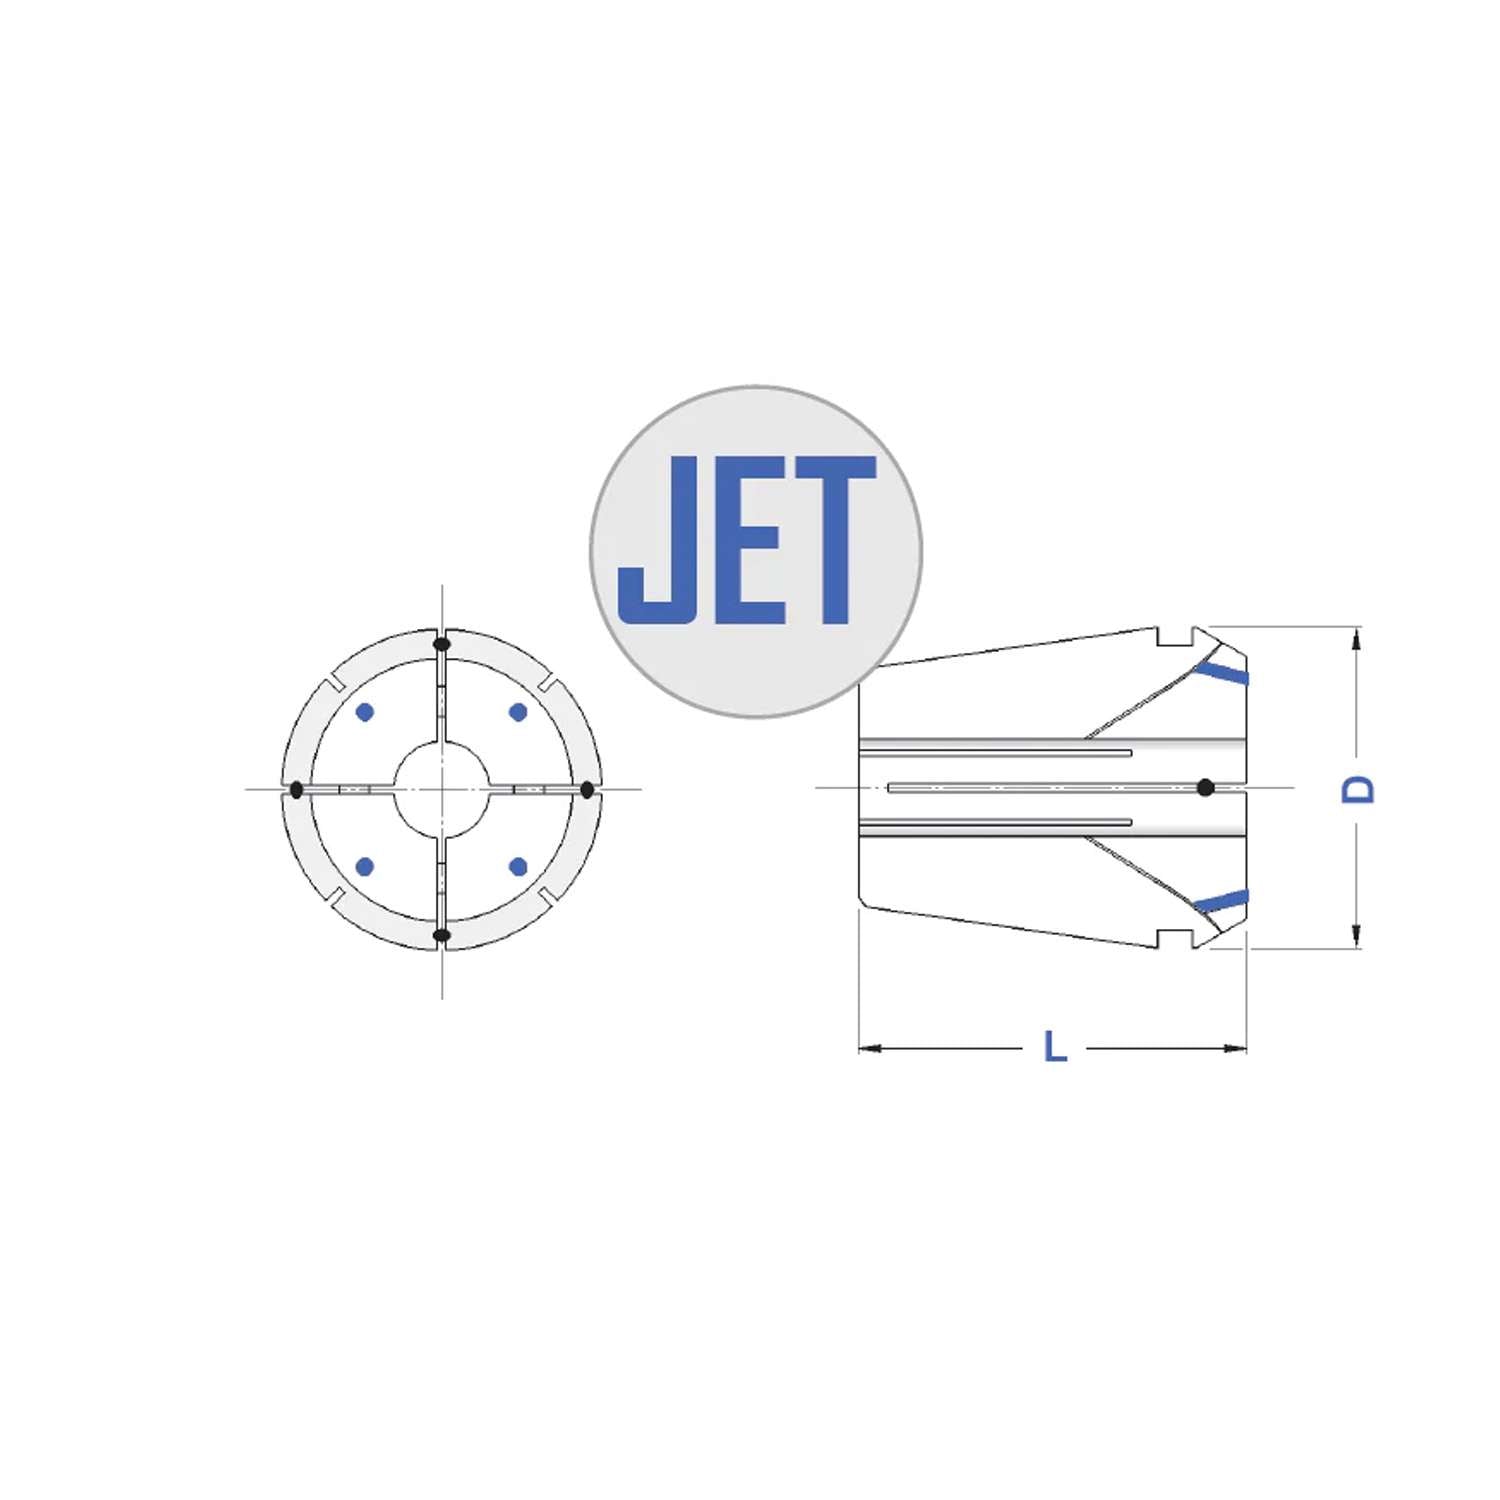 ER 20 JET pliers with refrigeration holes - Gait 0787JE (3,0-9,0)